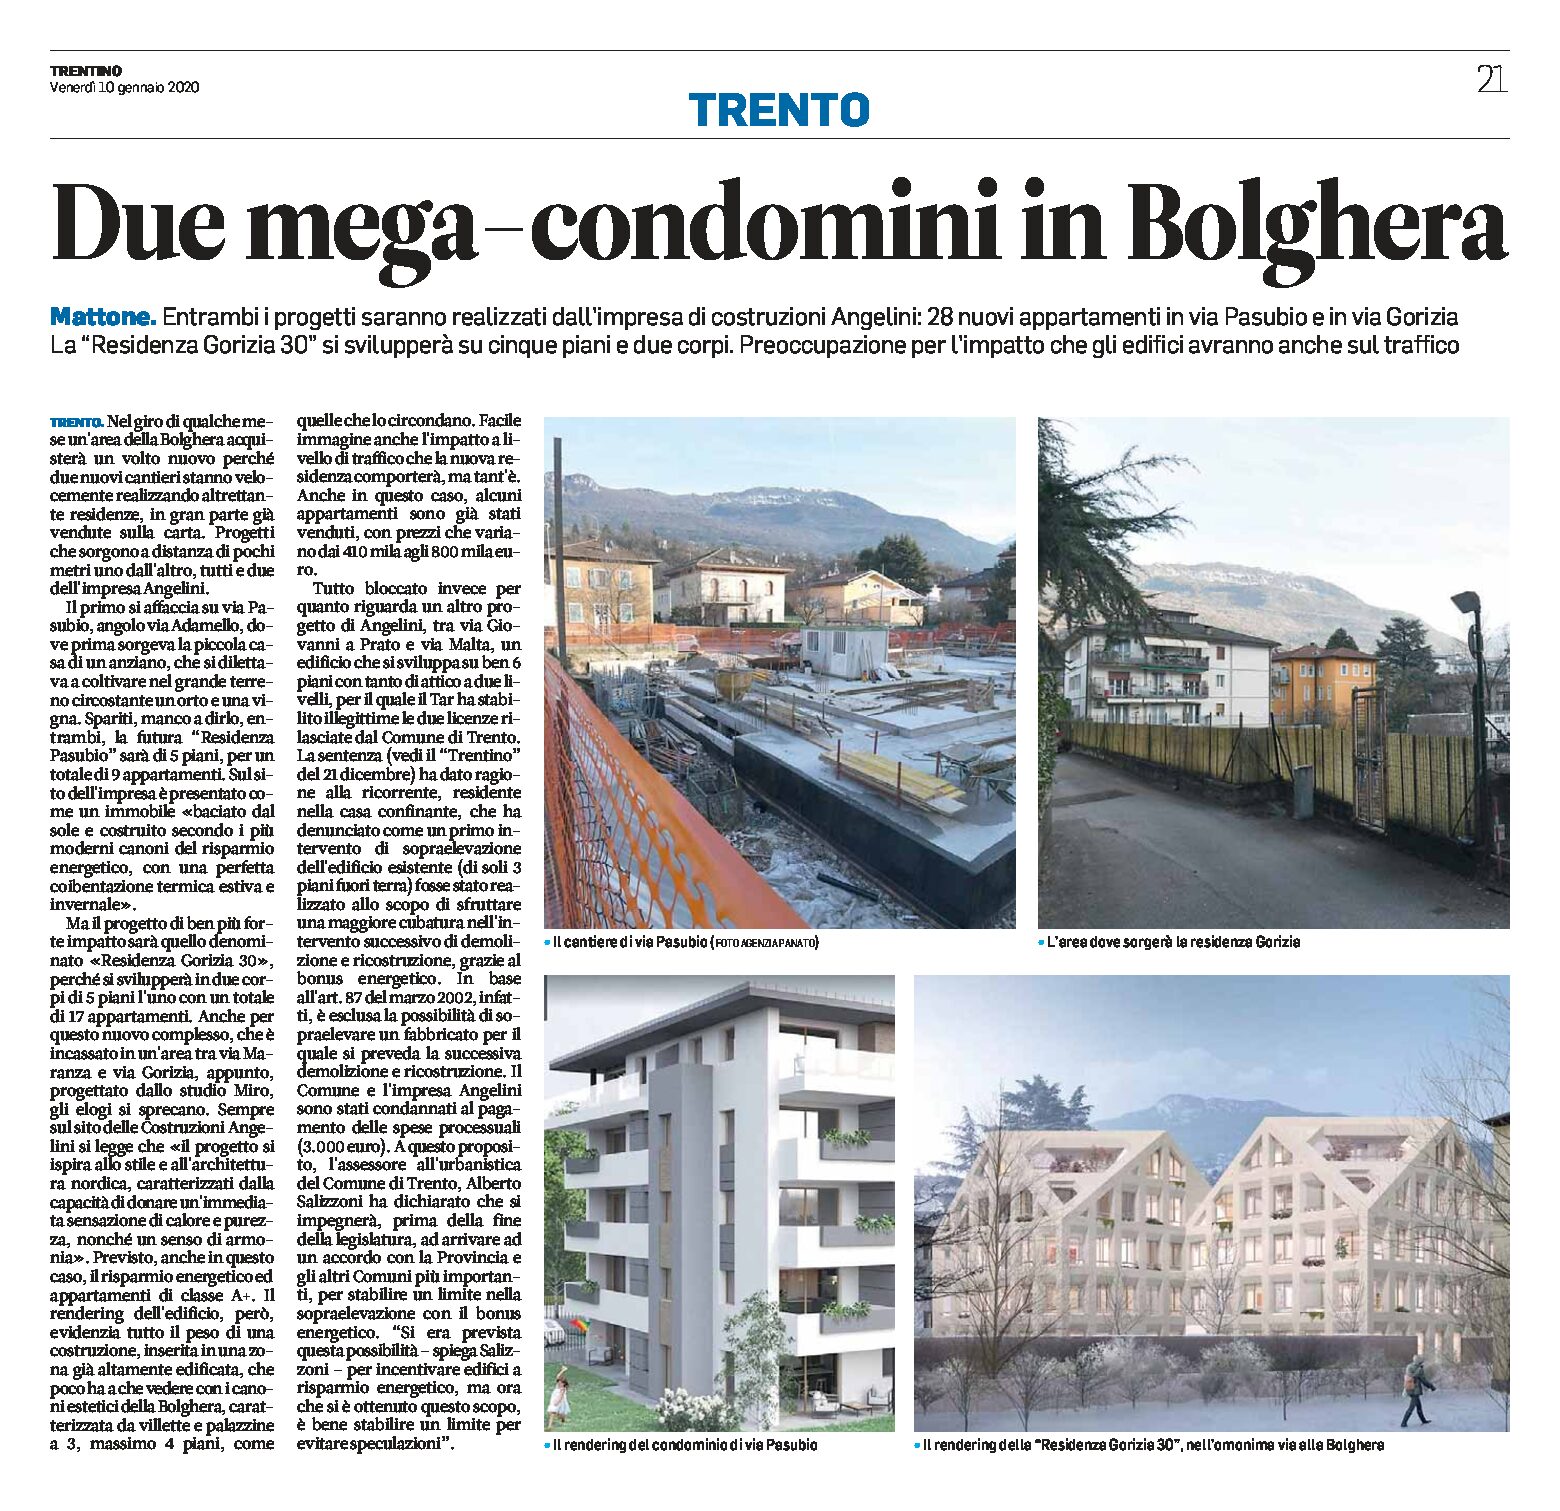 Trento: due mega-condomini in Bolghera